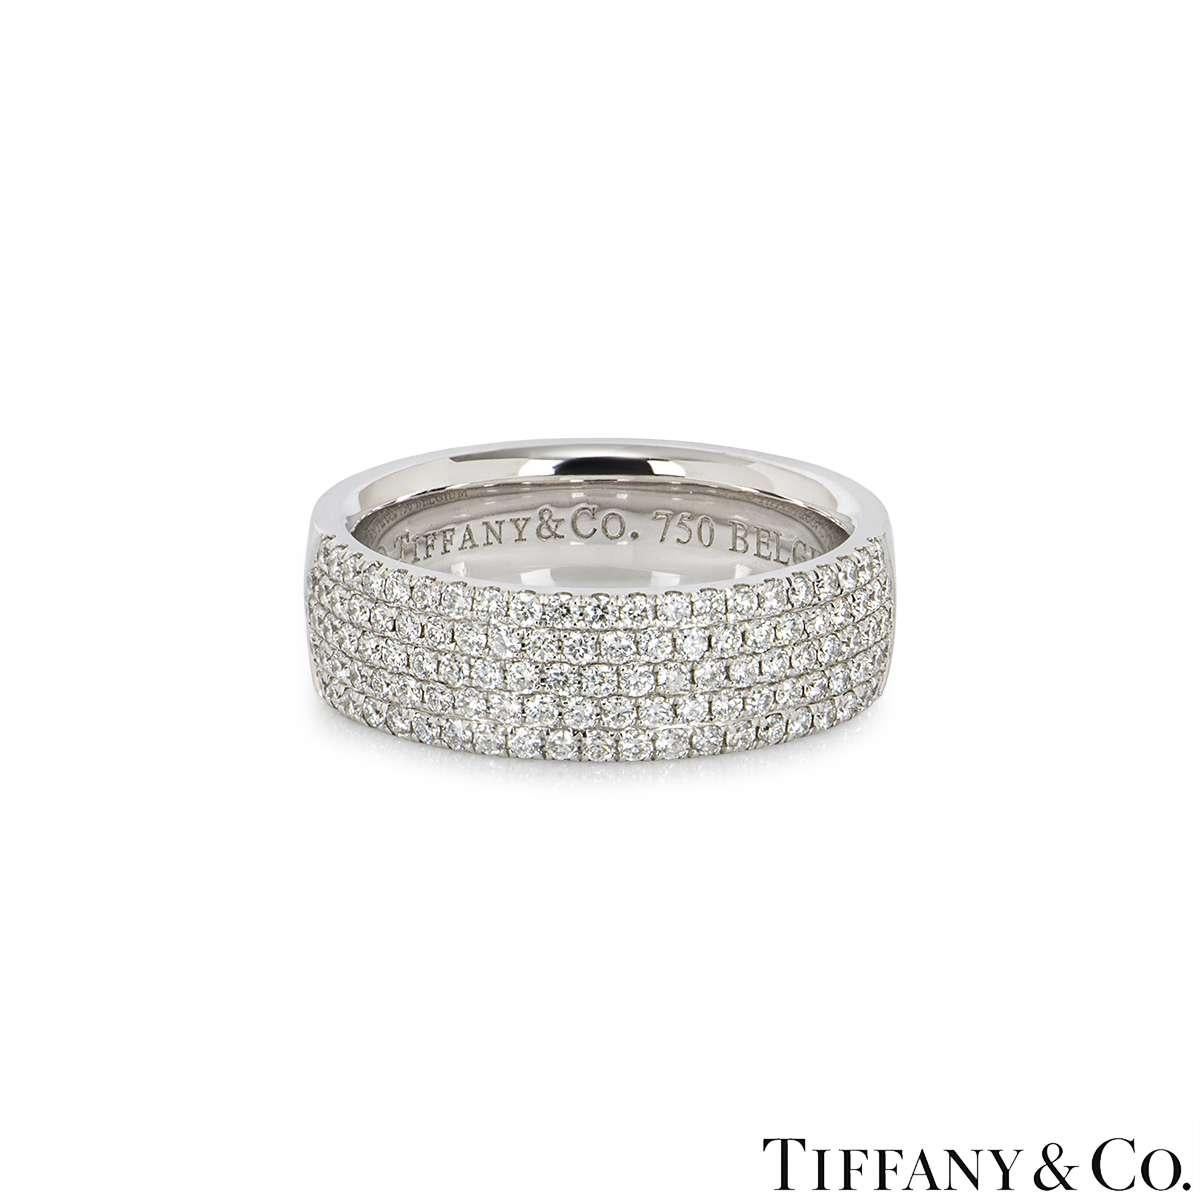 Tiffany & Co. Metro Anillo de diamantes en cinco filas Talla 7.5 Unisex Corte redondo en venta